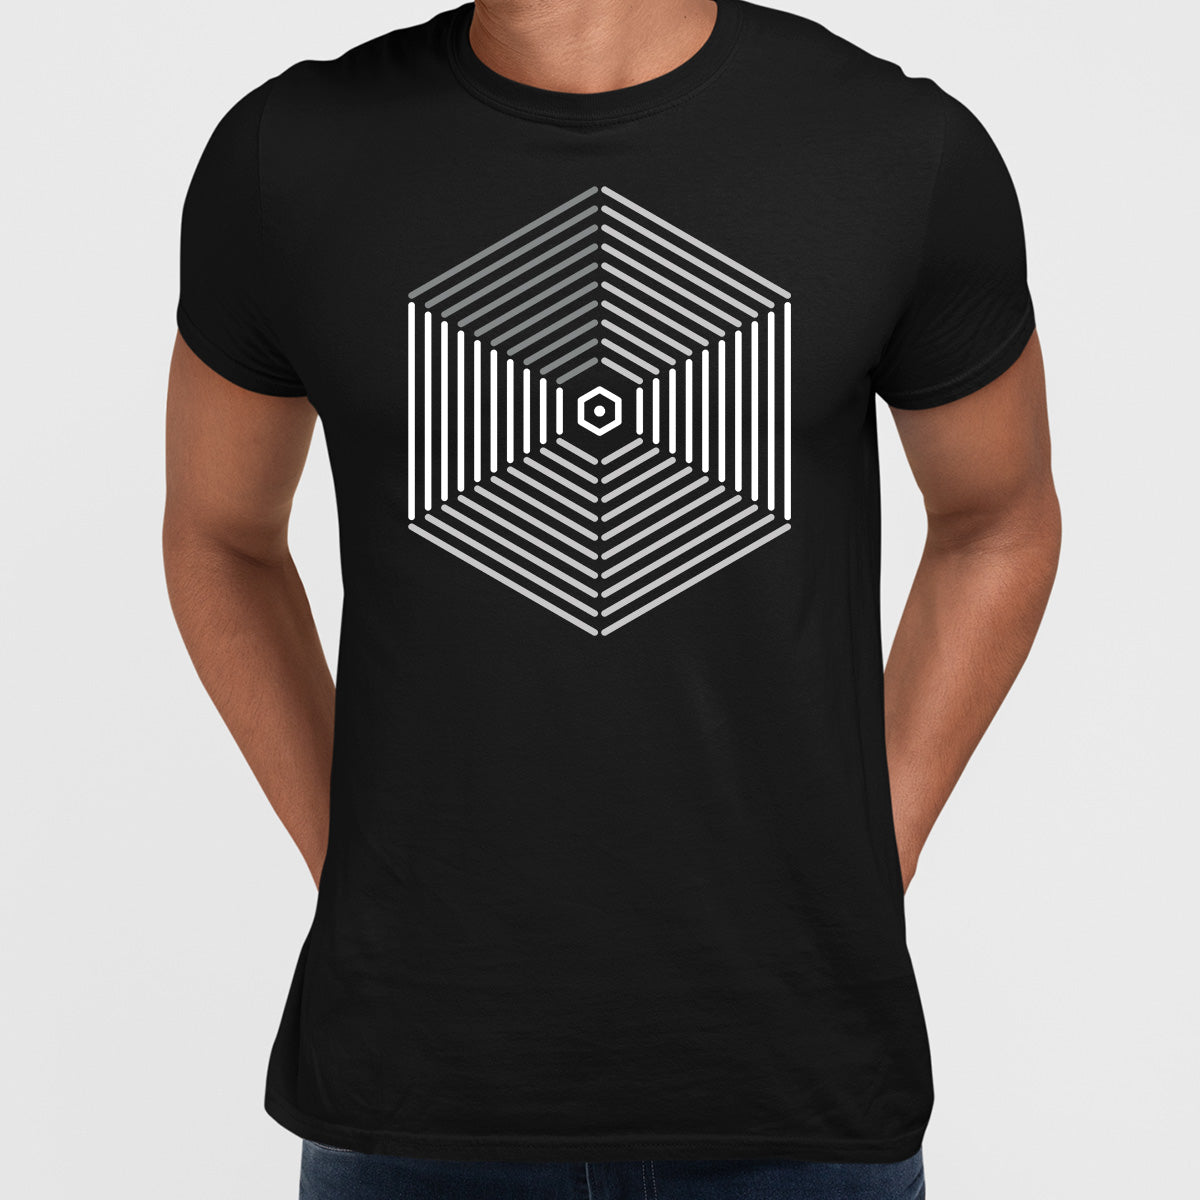 Modern Geometric Elements - Line Dots & Shapes Printed t-shirts Unisex Sample 05 - Kuzi Tees